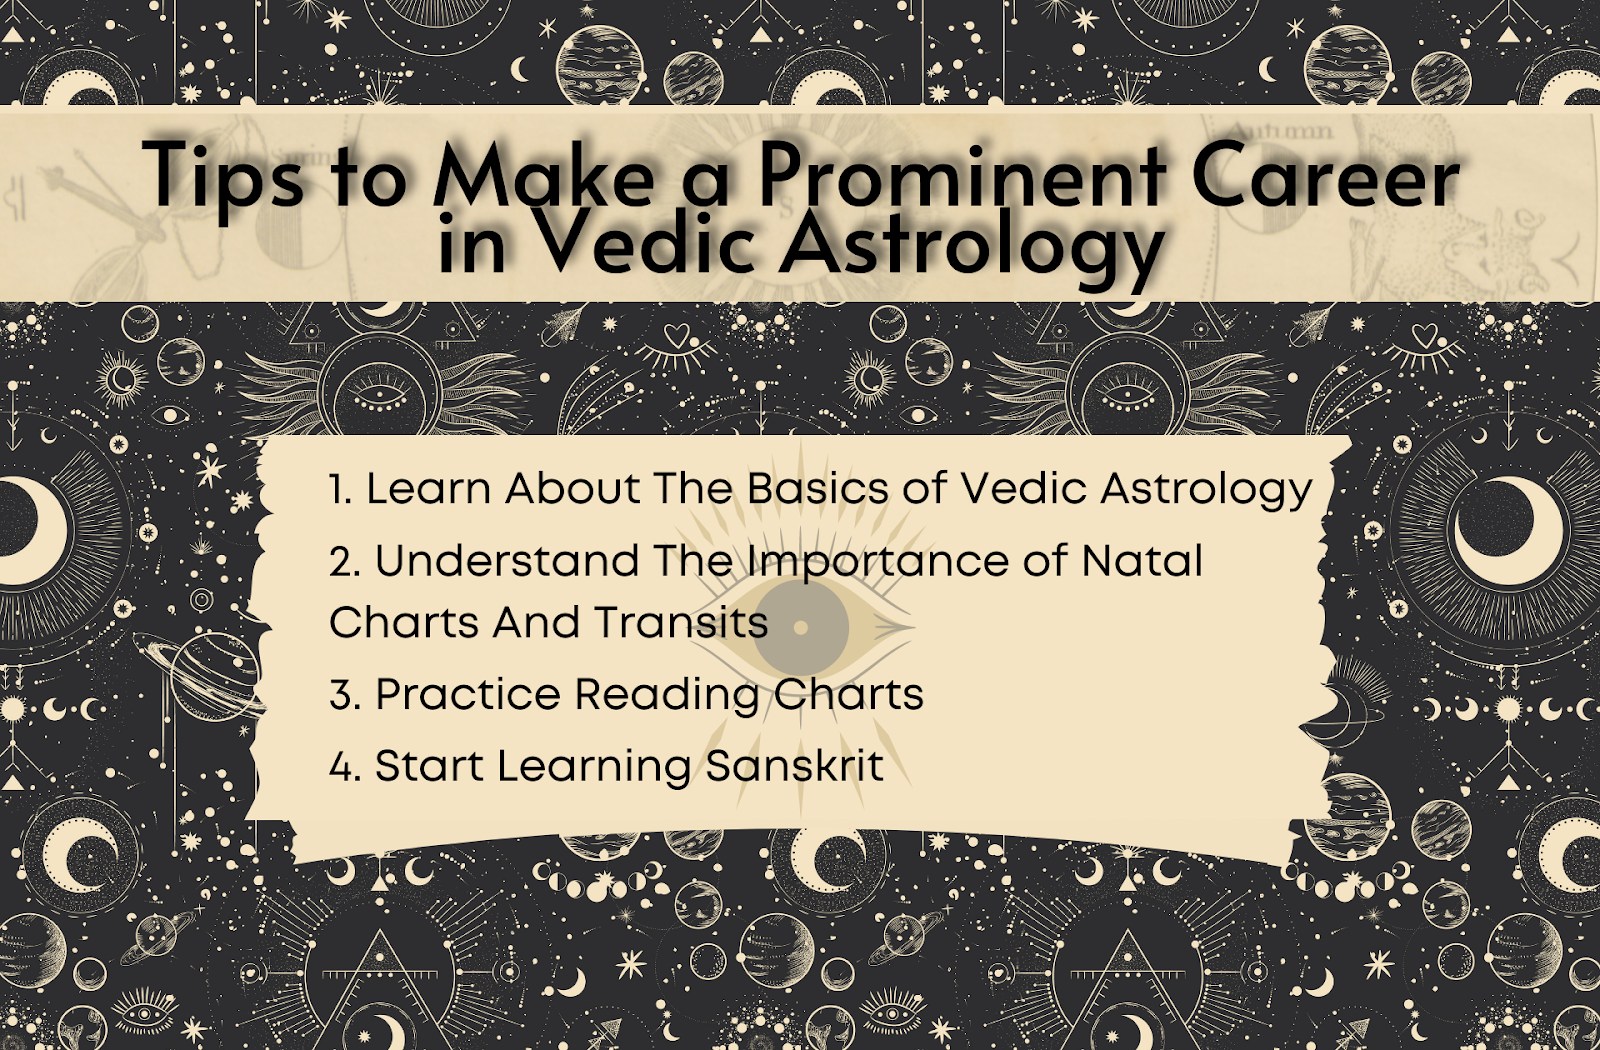 Aashish Patidar Astrologer shares tips for Prominent Career -